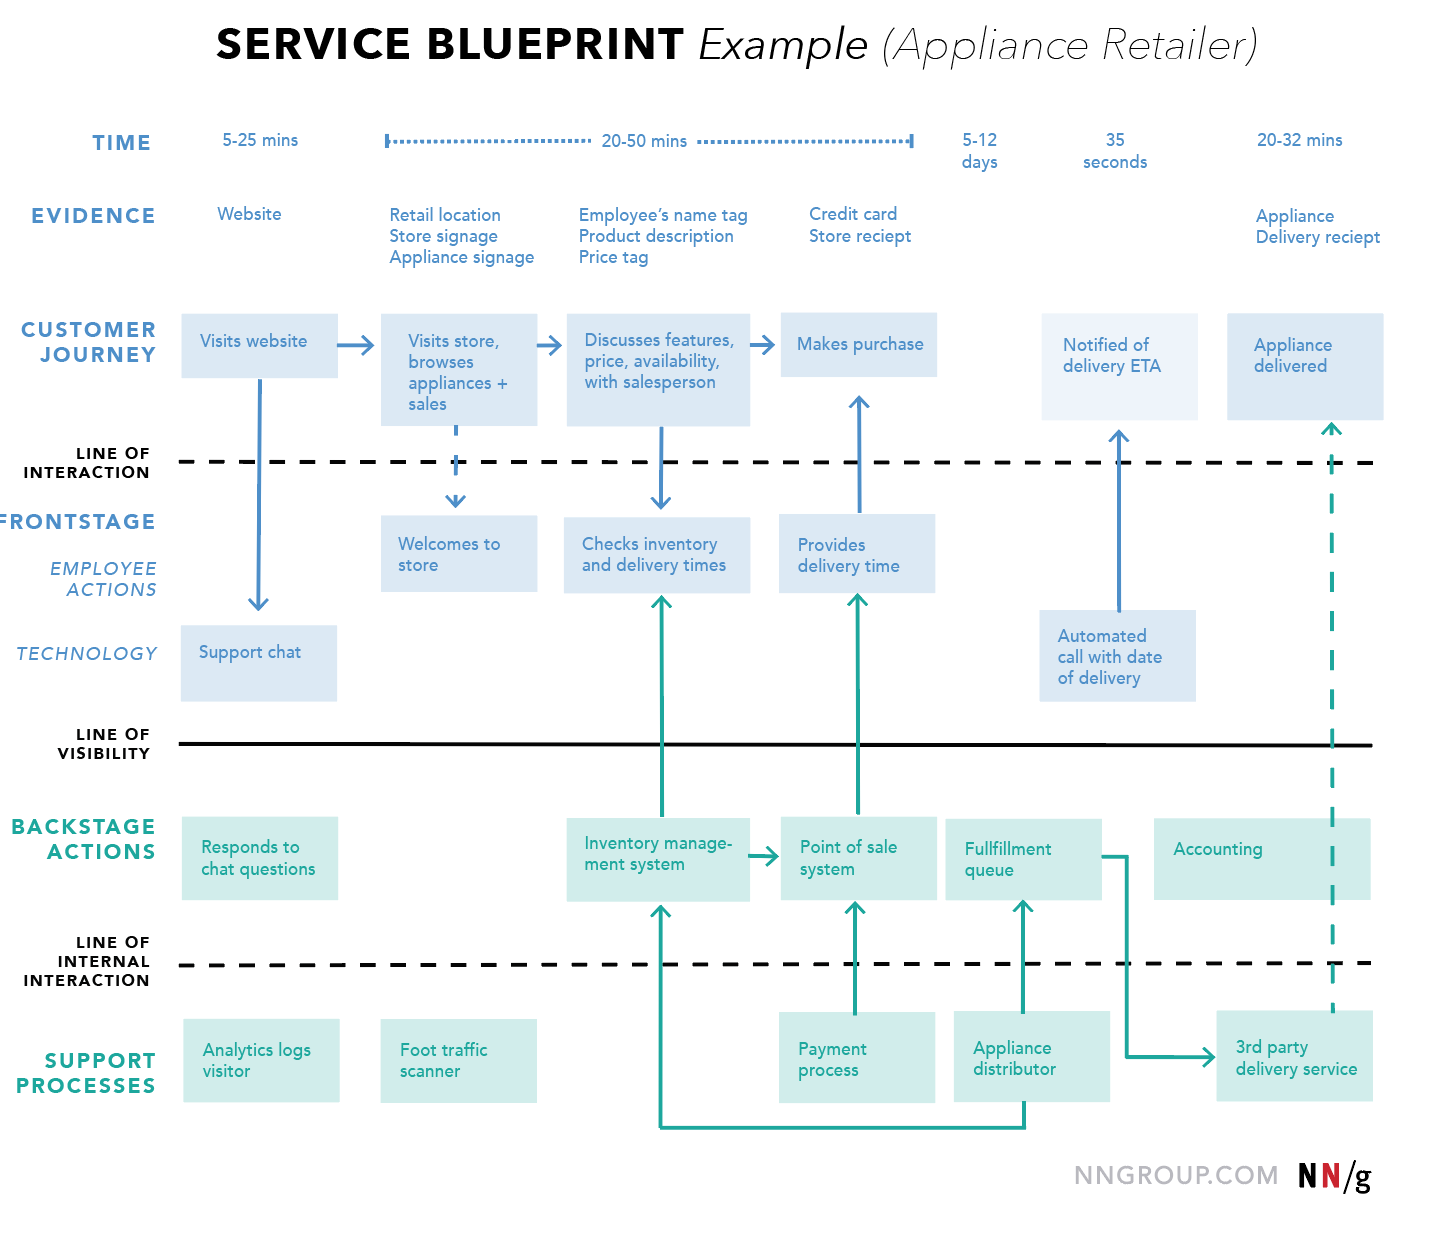 Service blueprint example